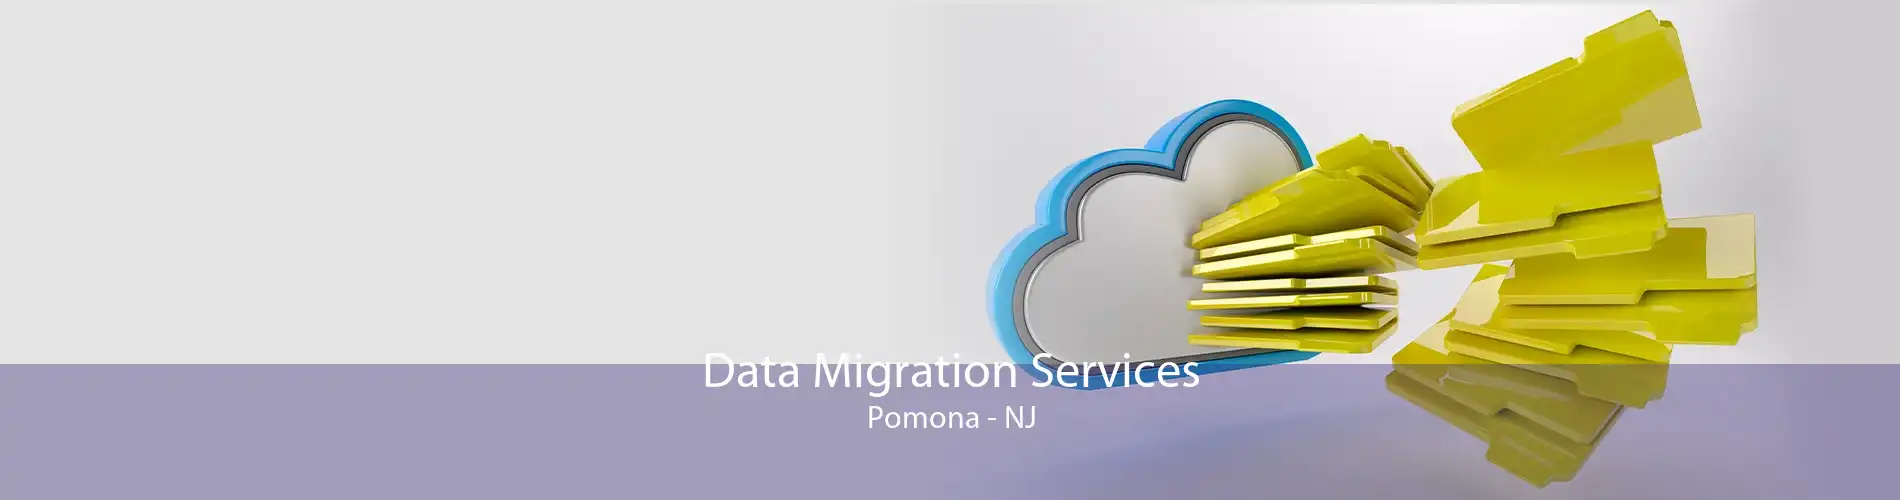 Data Migration Services Pomona - NJ